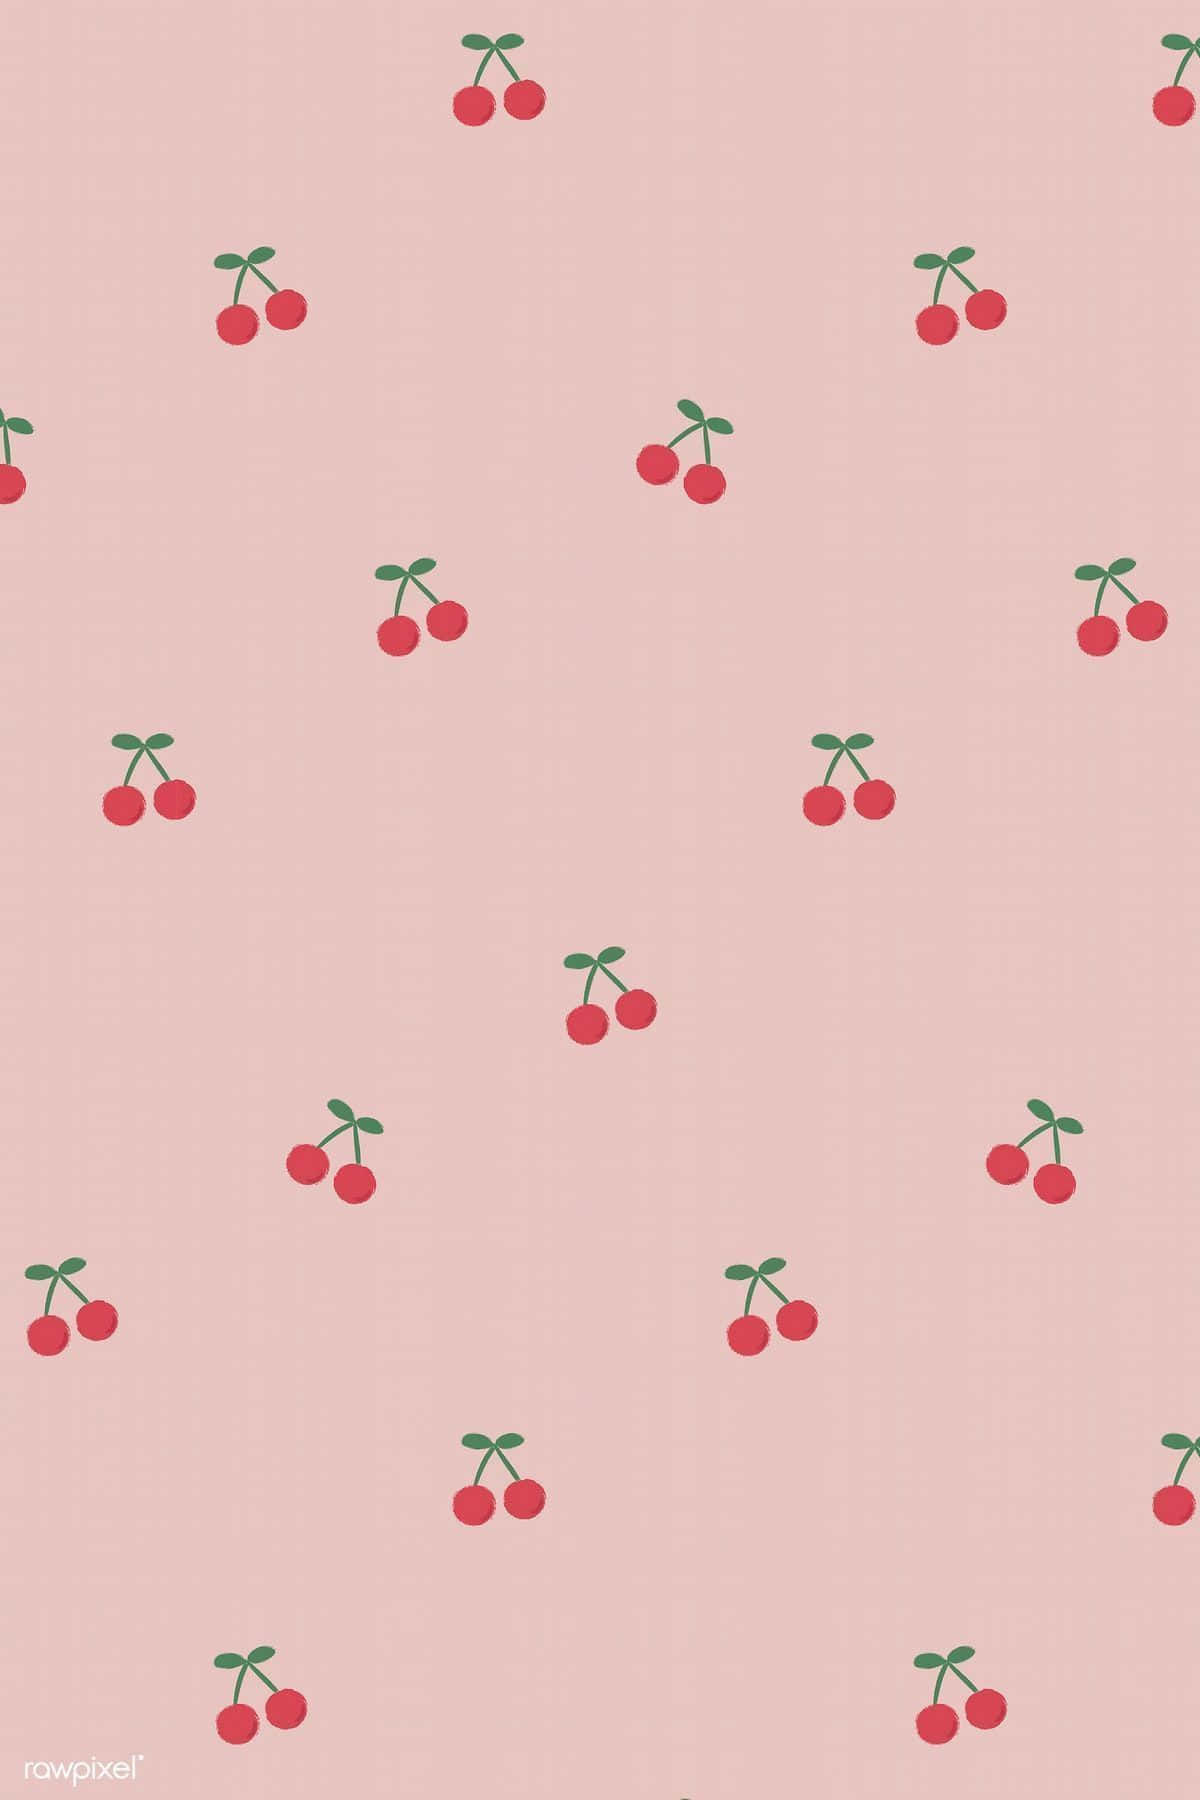 En pink tapet med kirsebær på det. Wallpaper